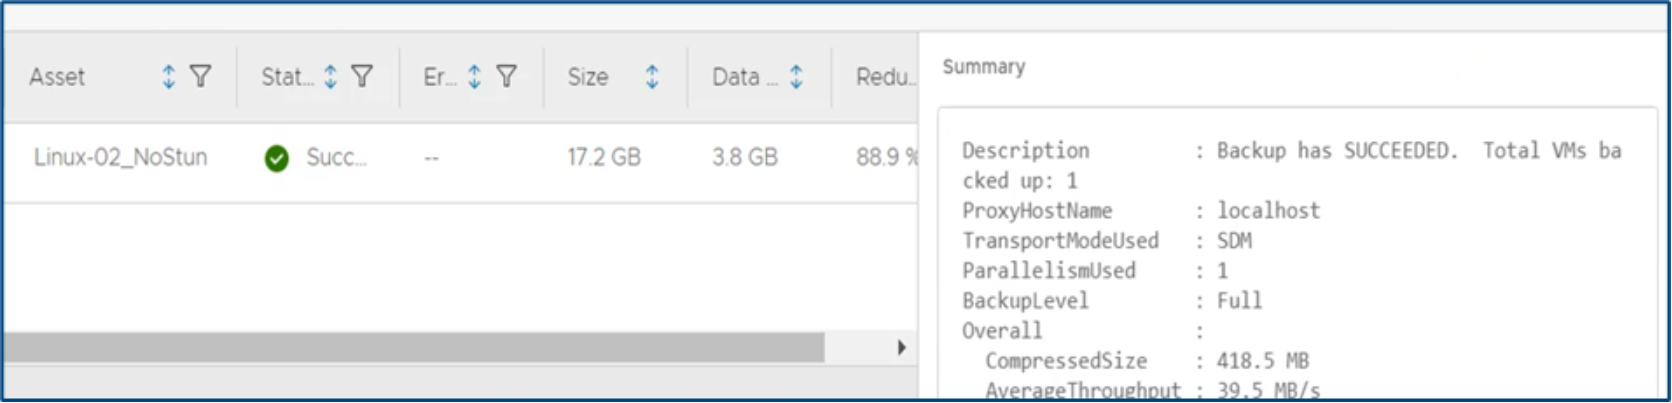 PowerProtect Data Manager GUI screenshot showing a successful Transparent Snapshots backup job